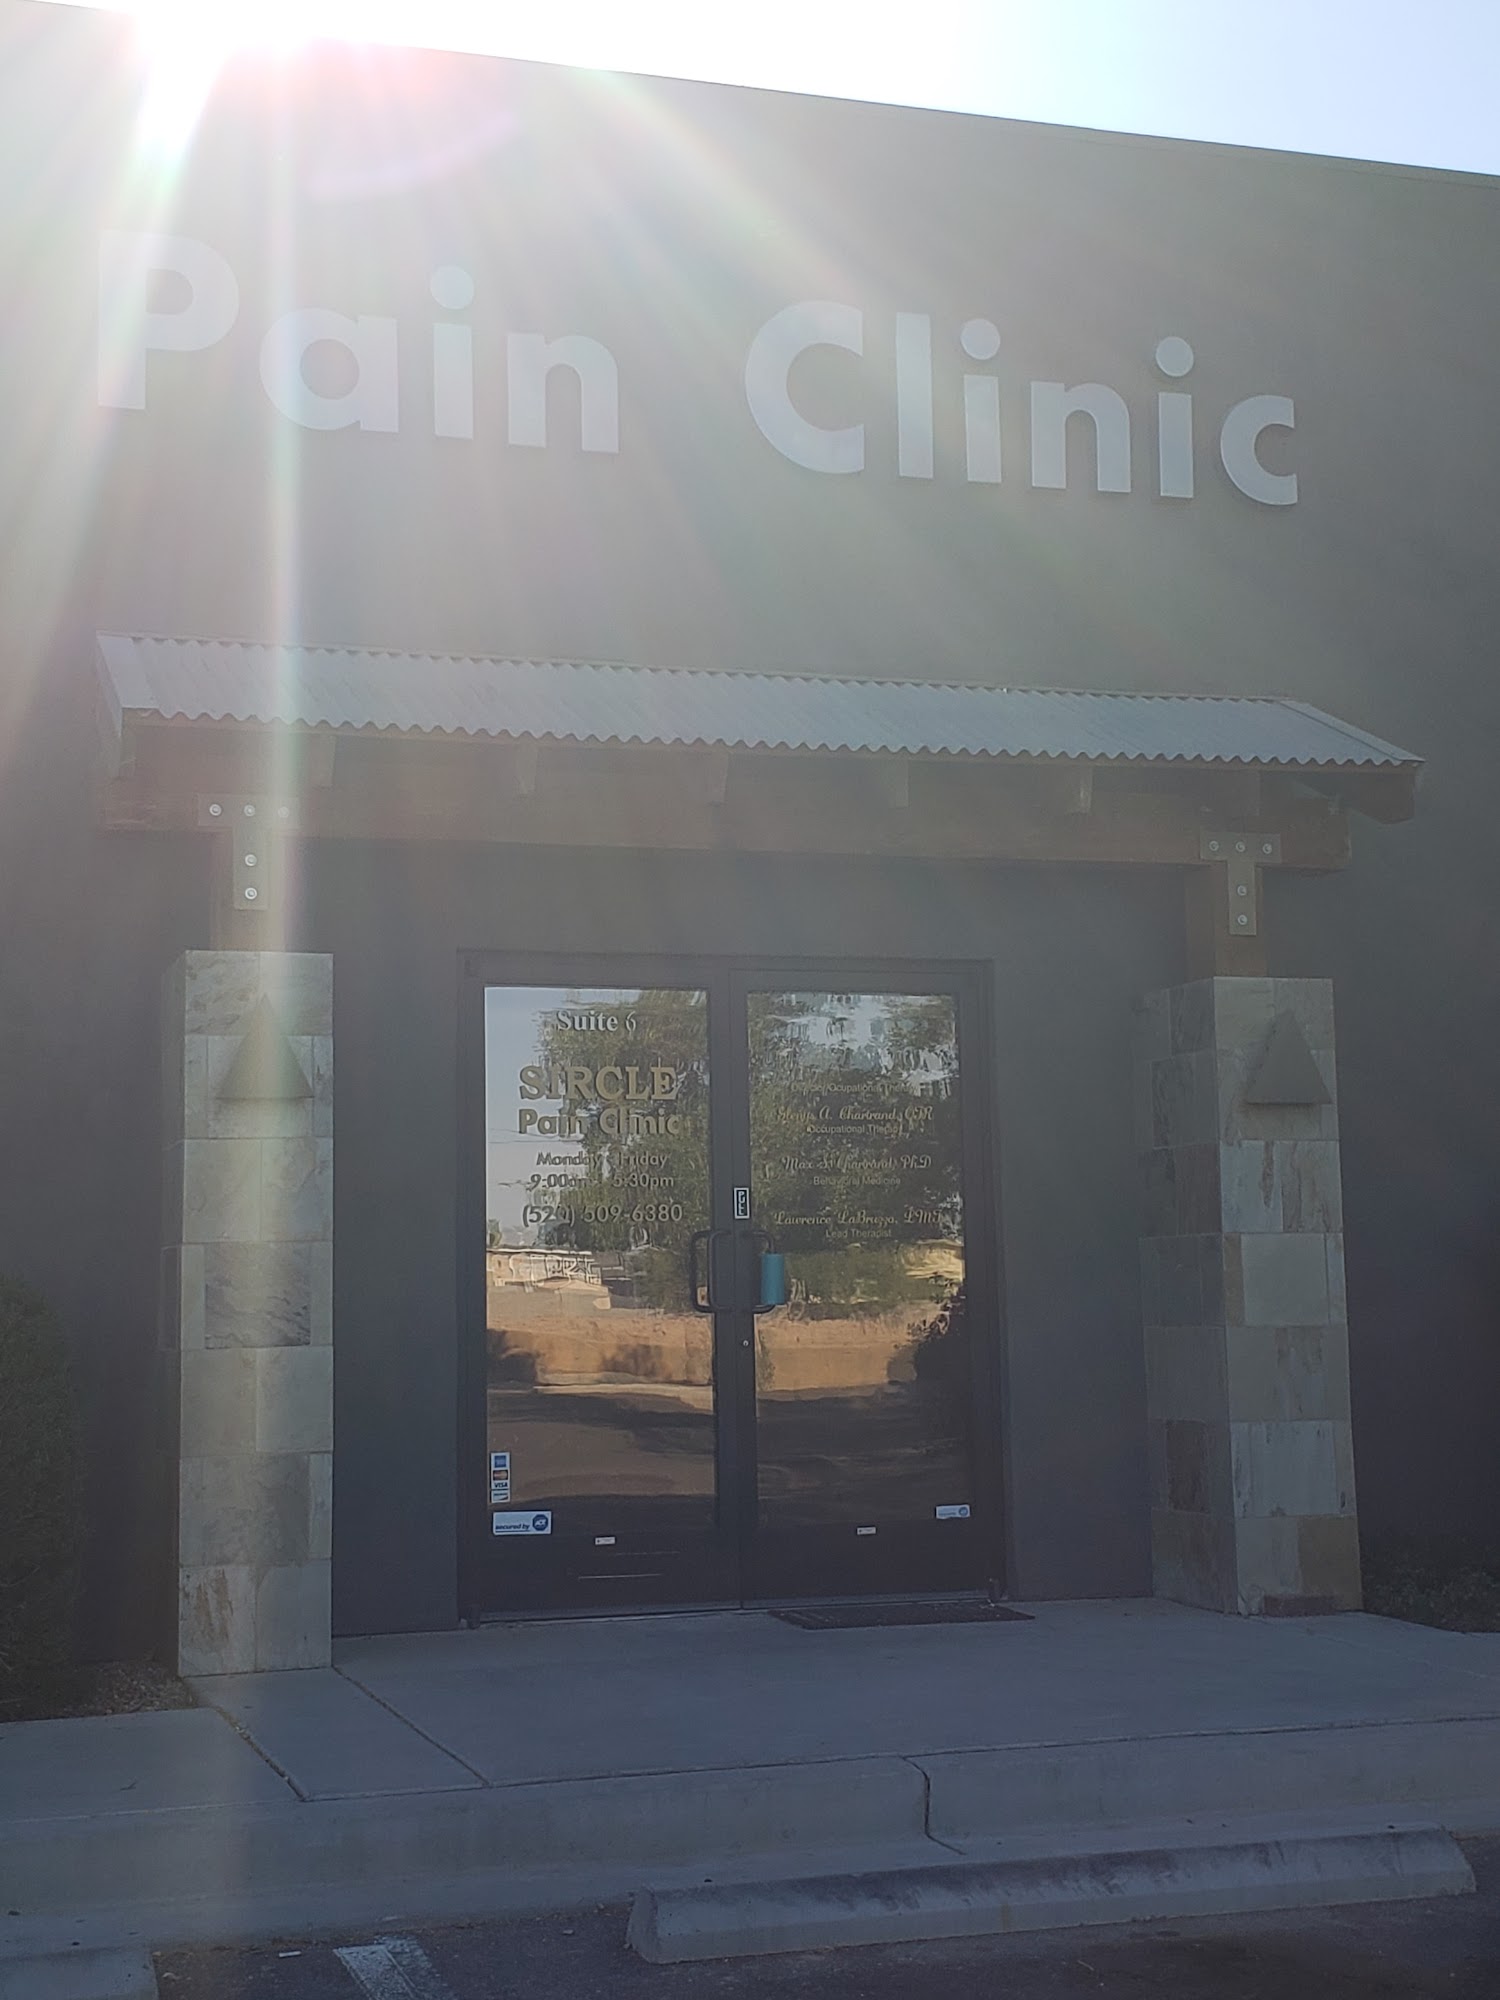 Sircle Pain Clinic